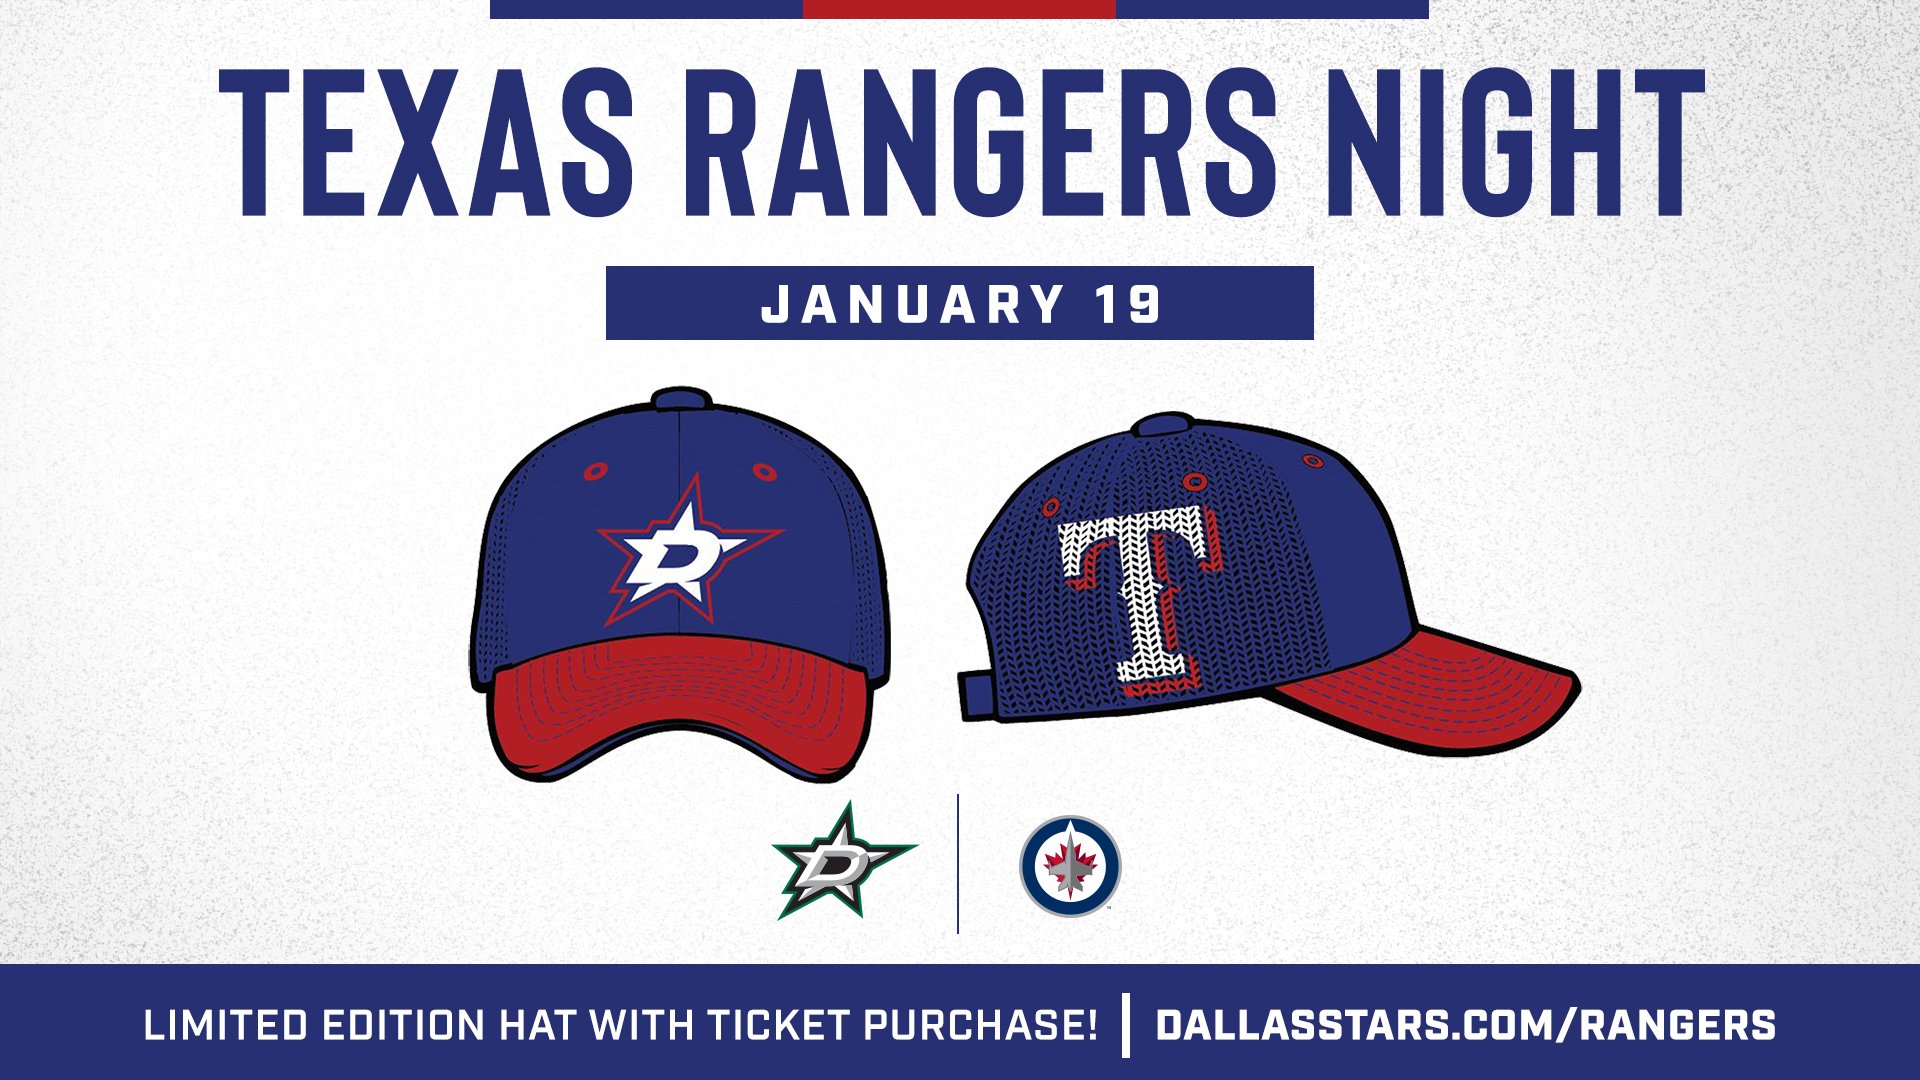 texas rangers dallas stars night